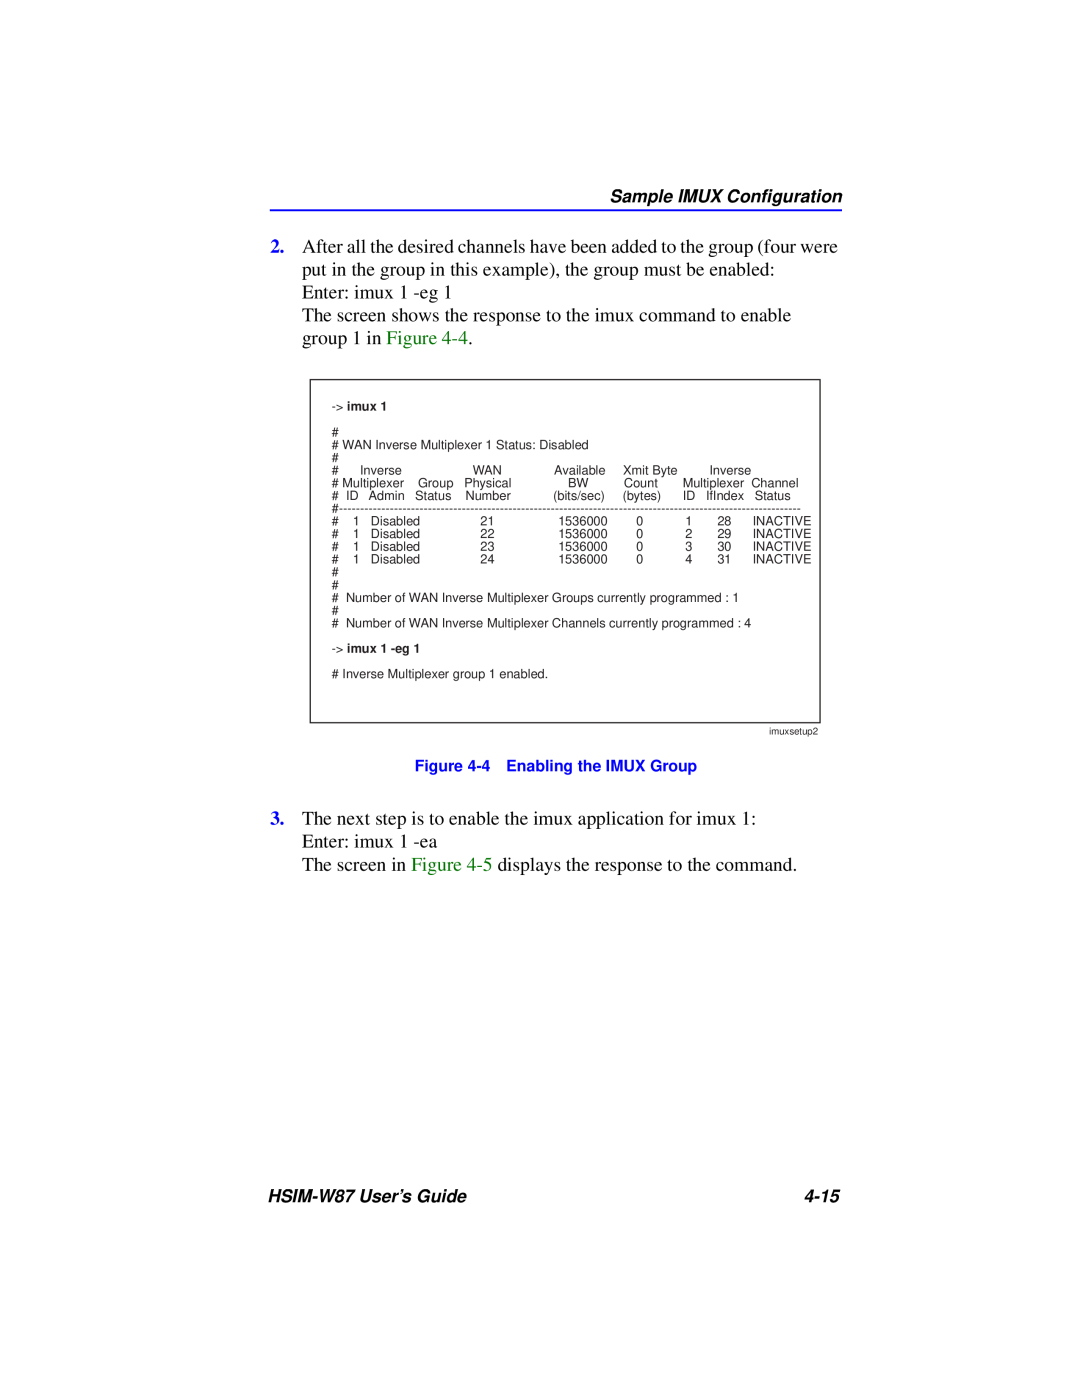 Cabletron Systems HSIM-W87 manual Enter imux 1 -eg 